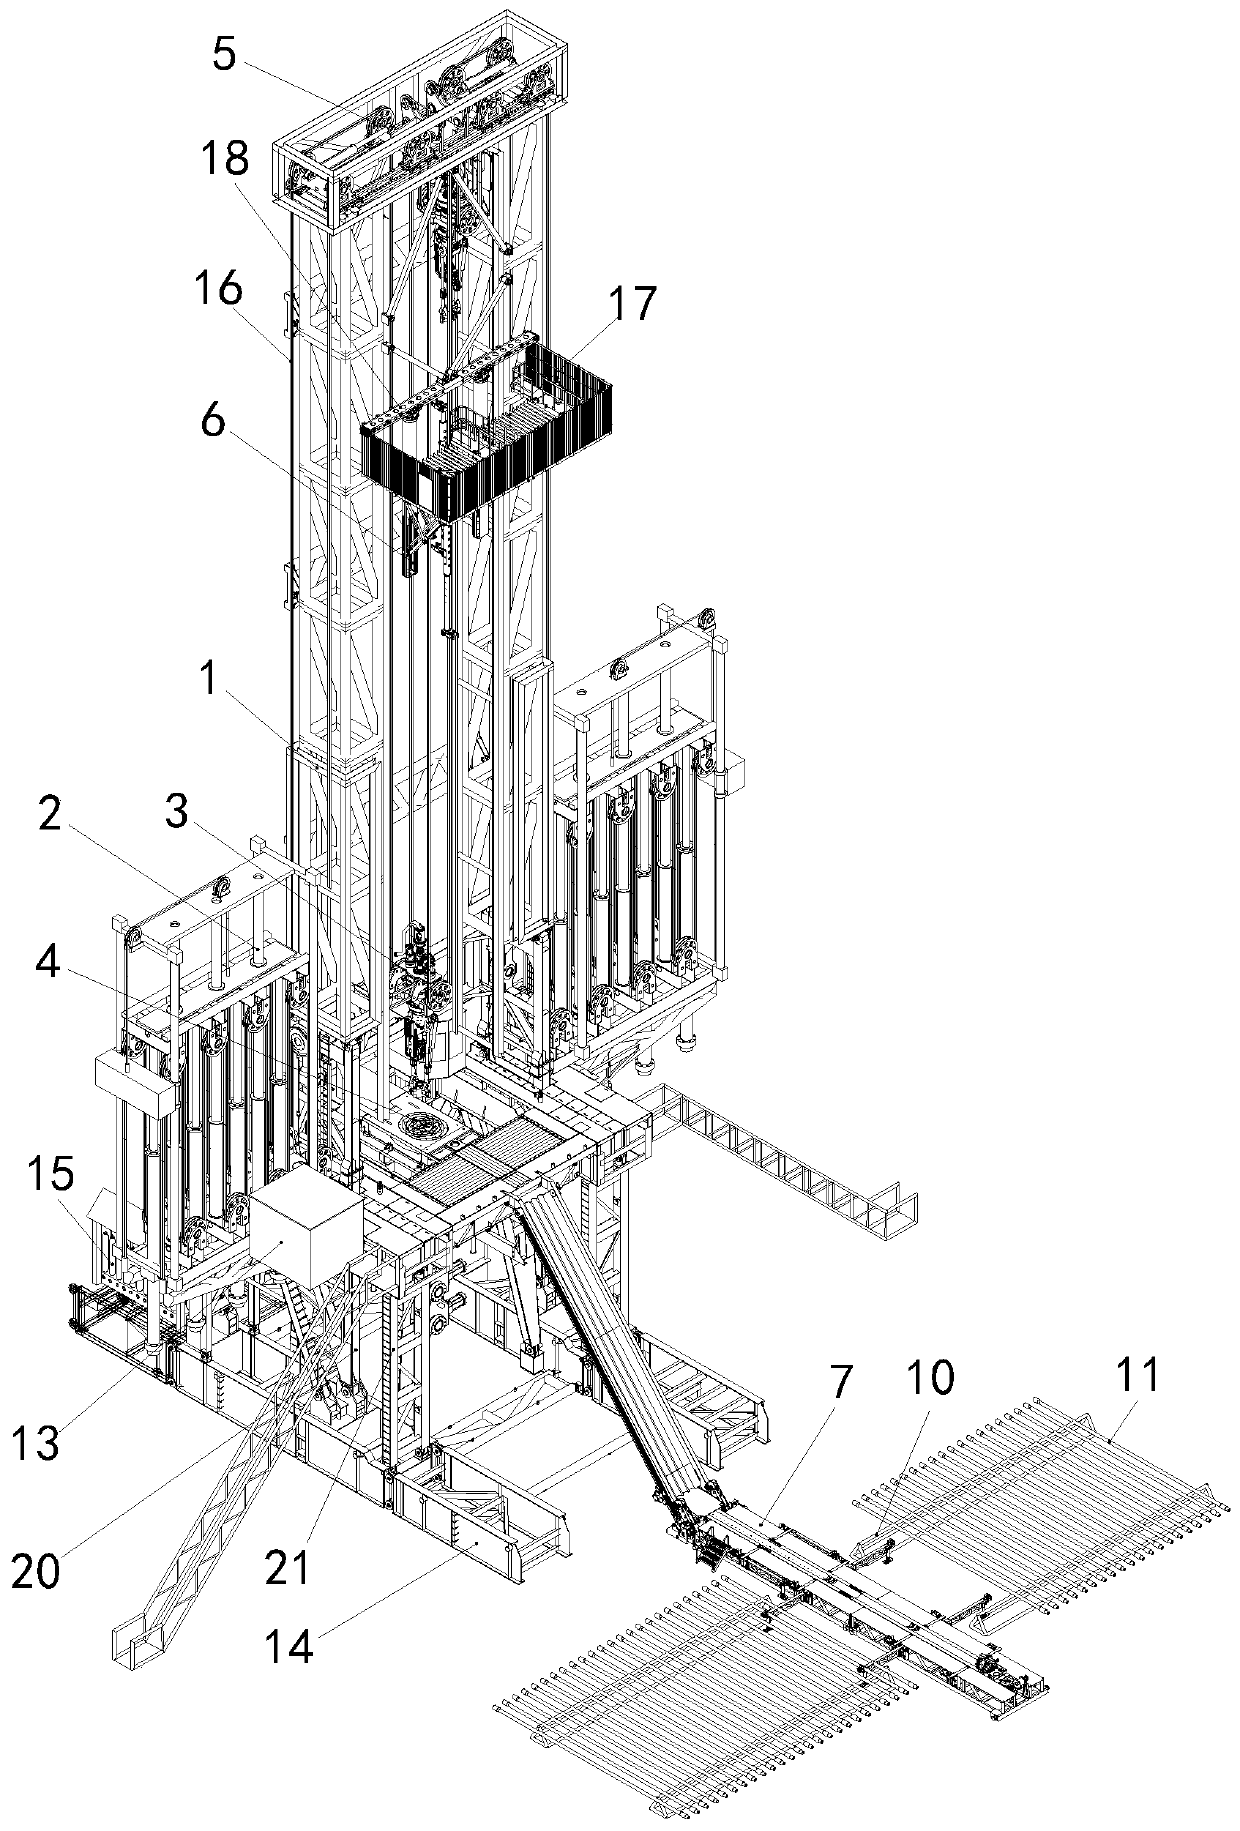 Full-hydraulic deep well drilling machine